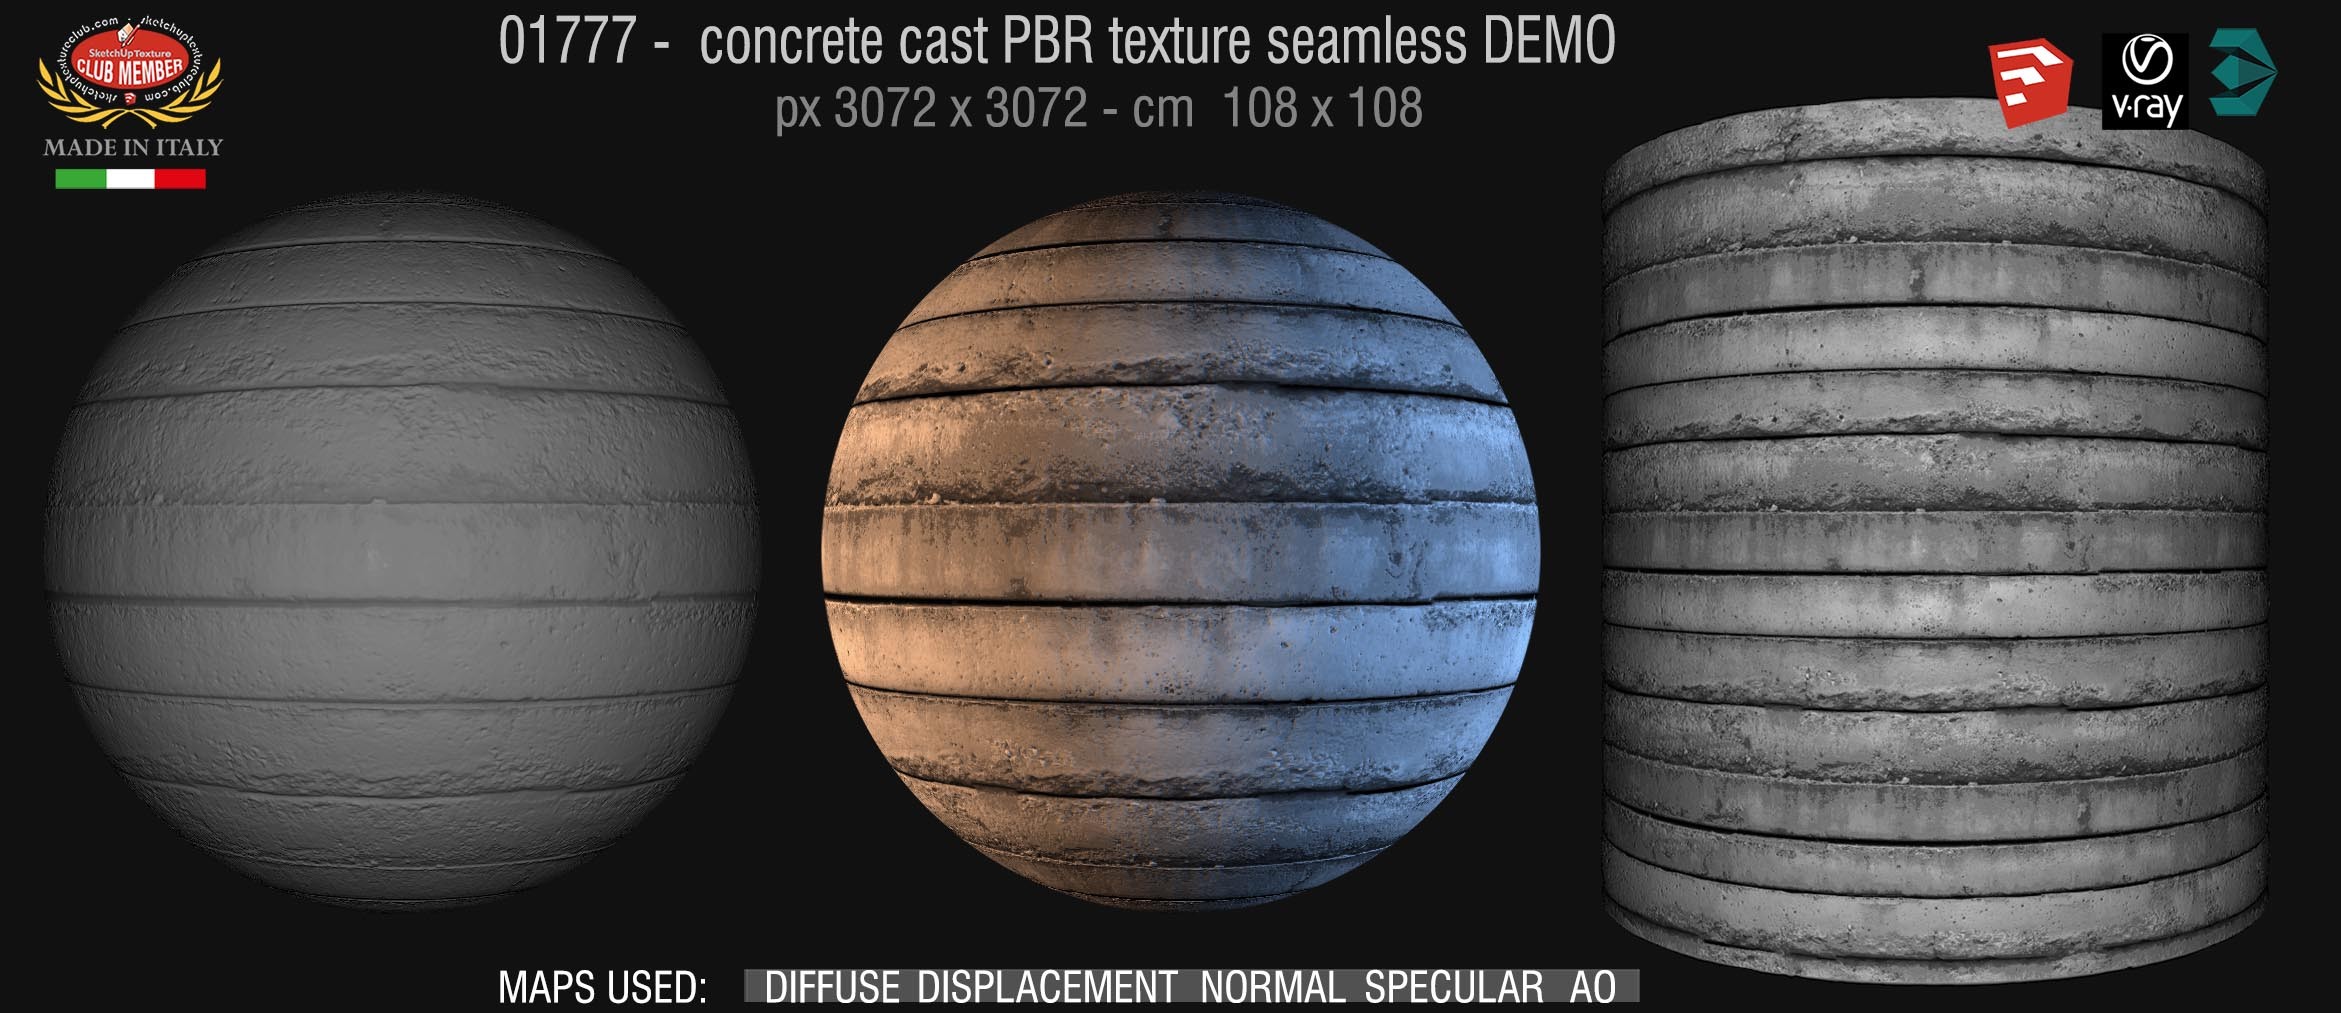 01777 concrete cast PBR texture seamless DEMO